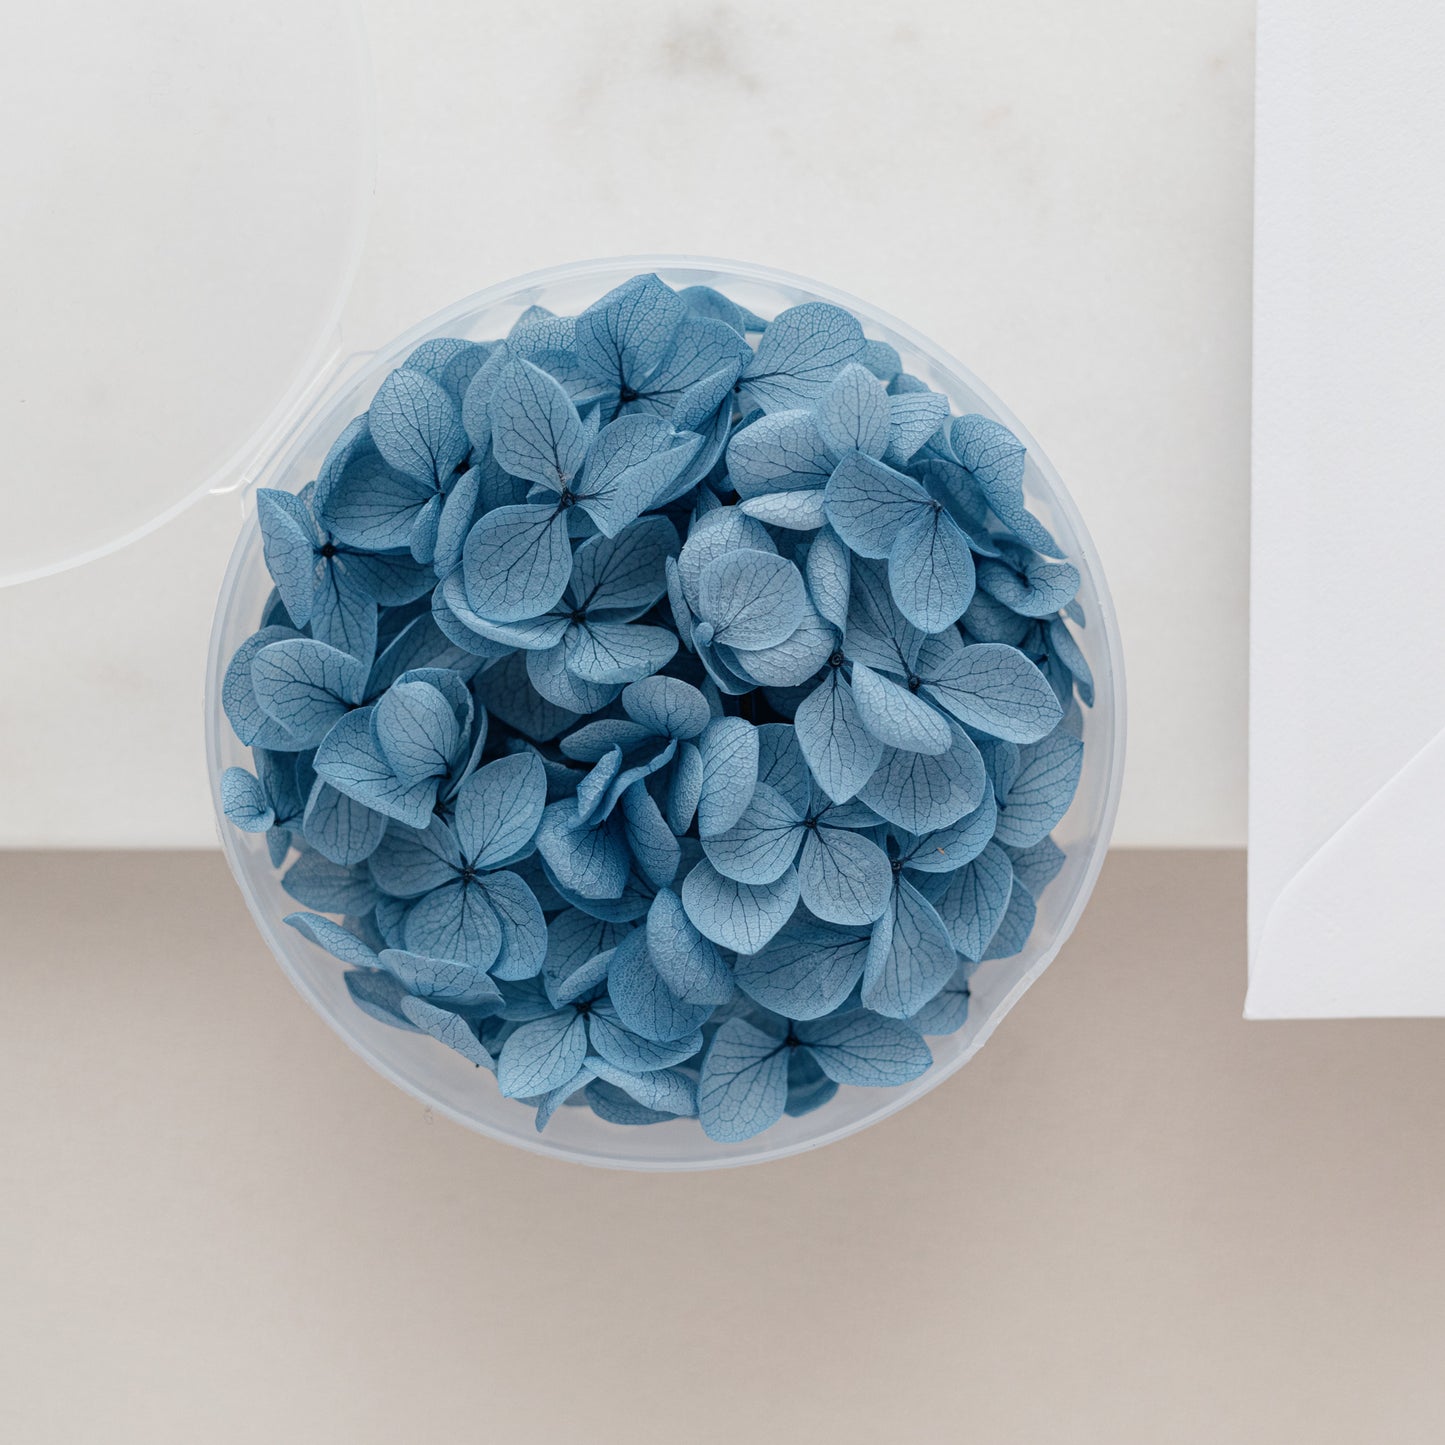 Midnight Blue – Dried Hydrangea Petals